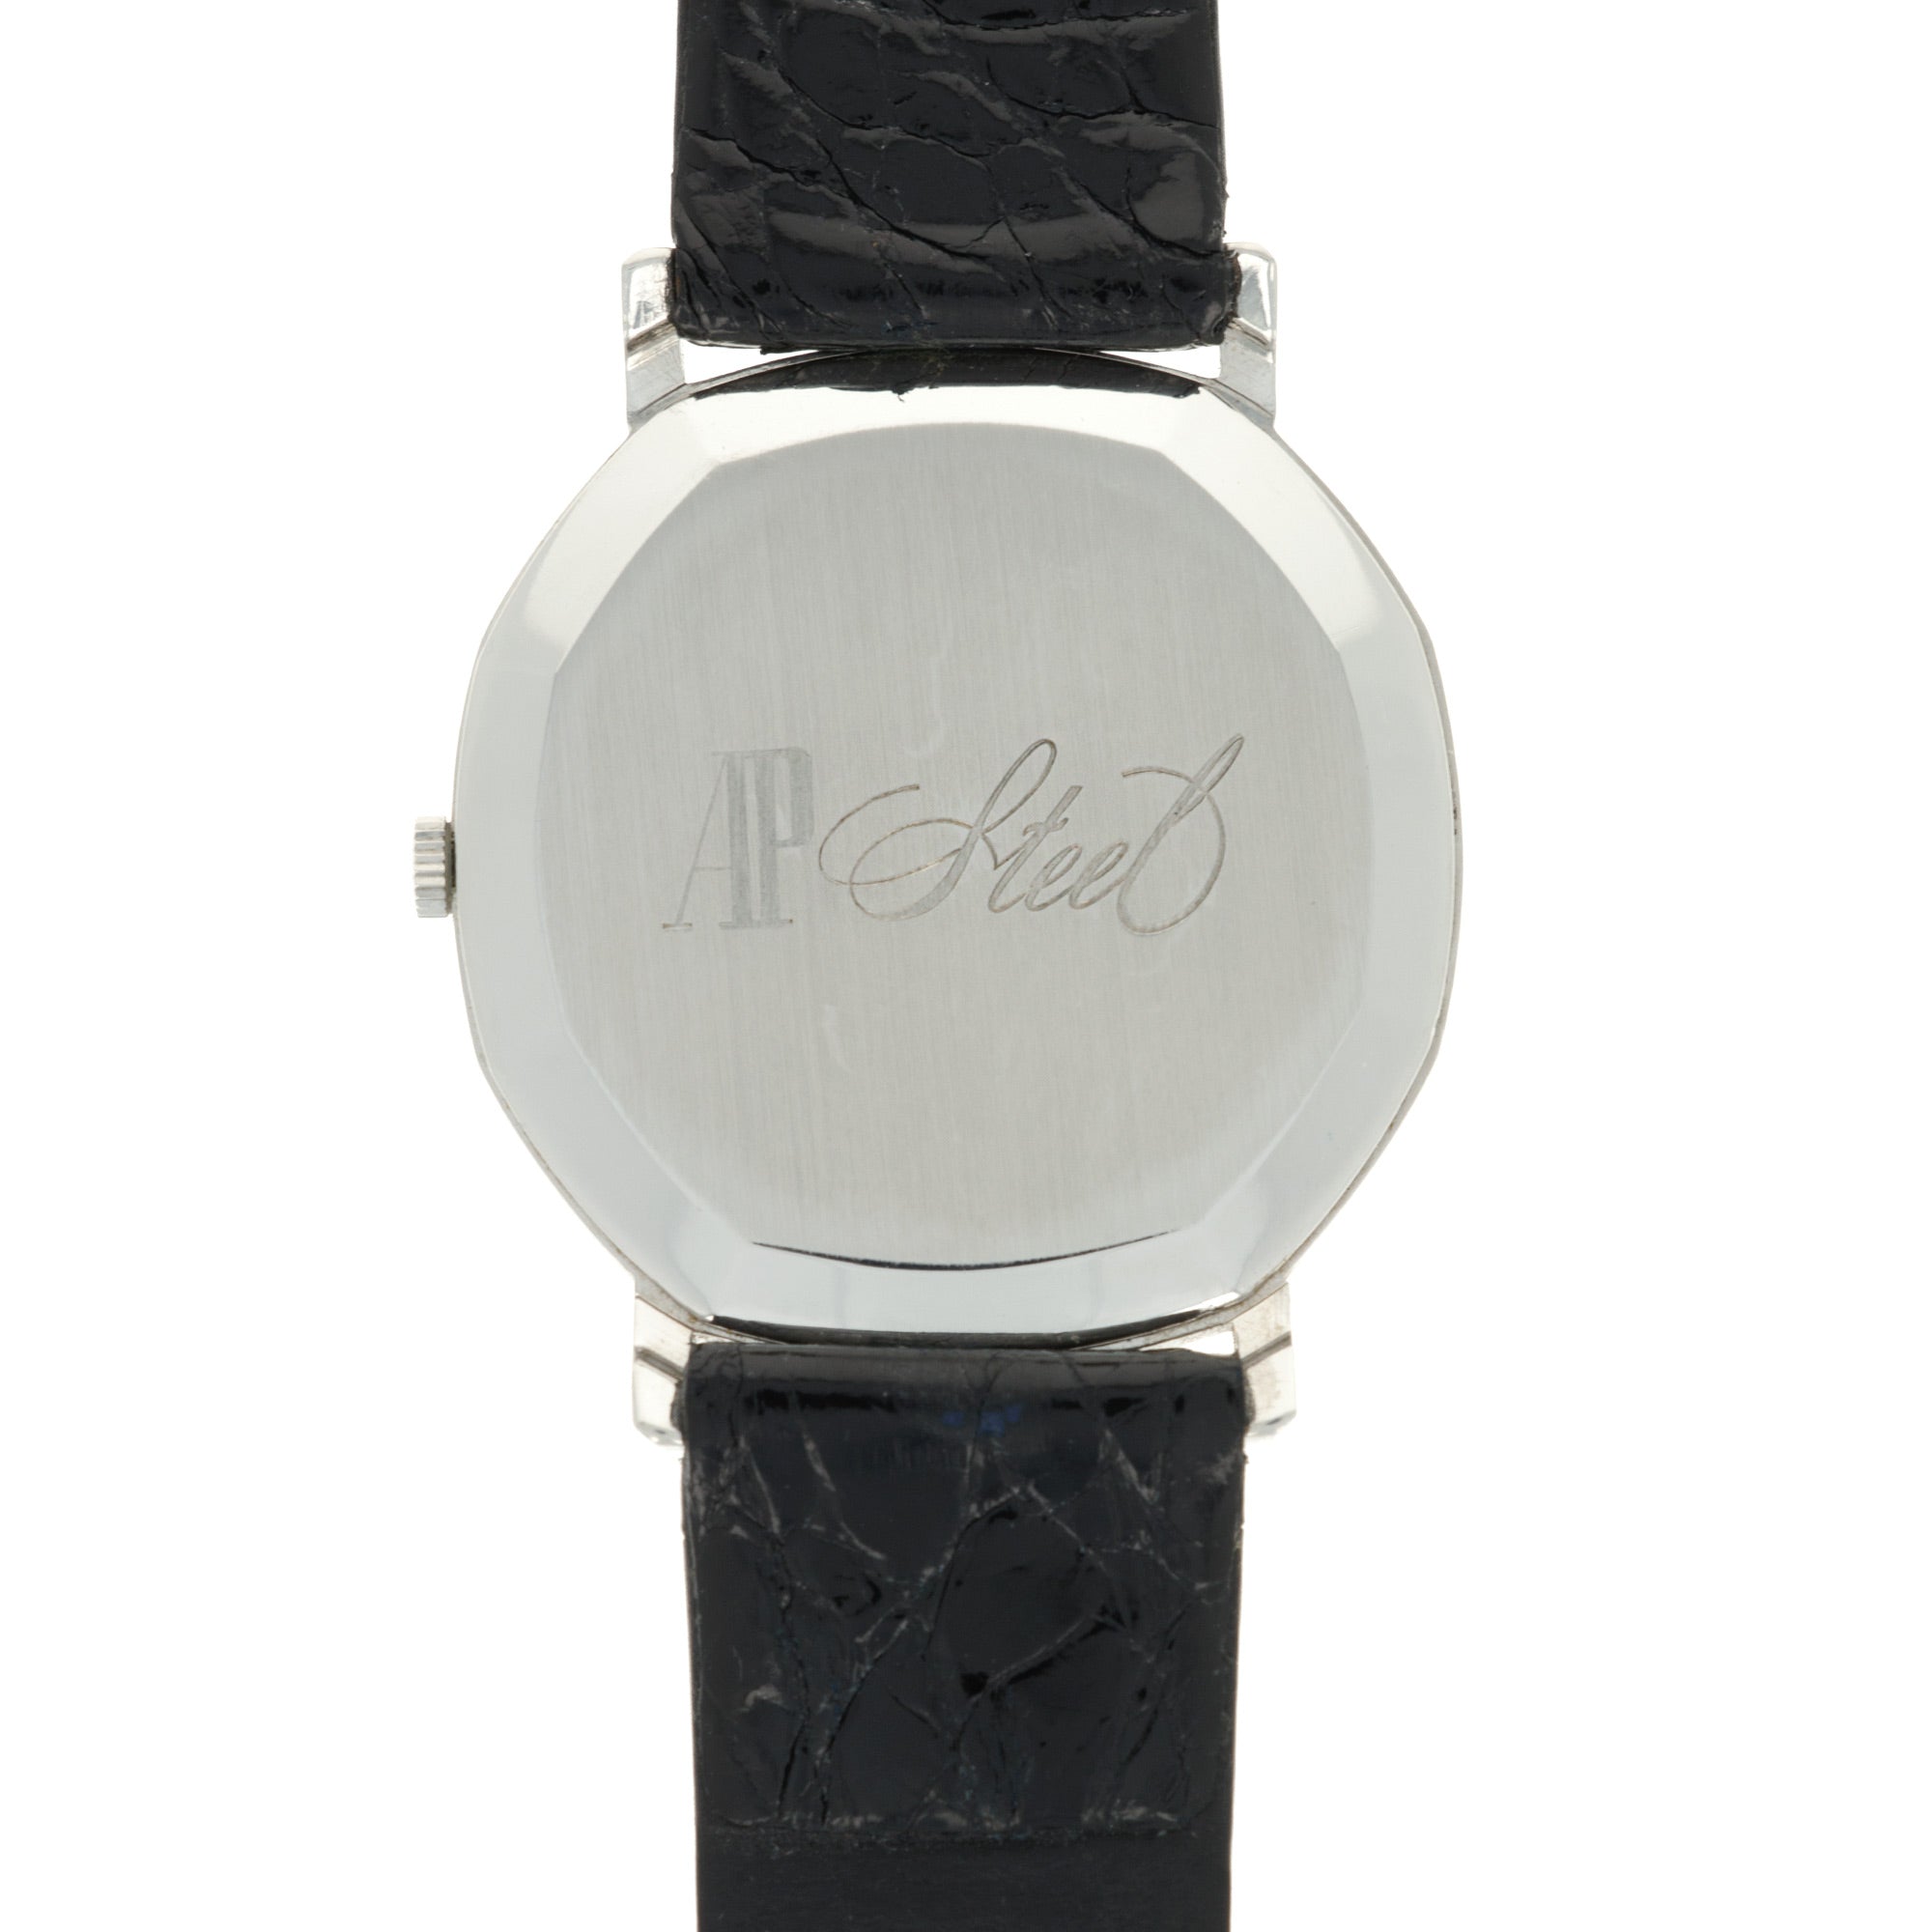 Audemars Piguet - Audemars Piguet Steel Automatic Watch, Ref. 4010 with Attractive Spider Dial - The Keystone Watches